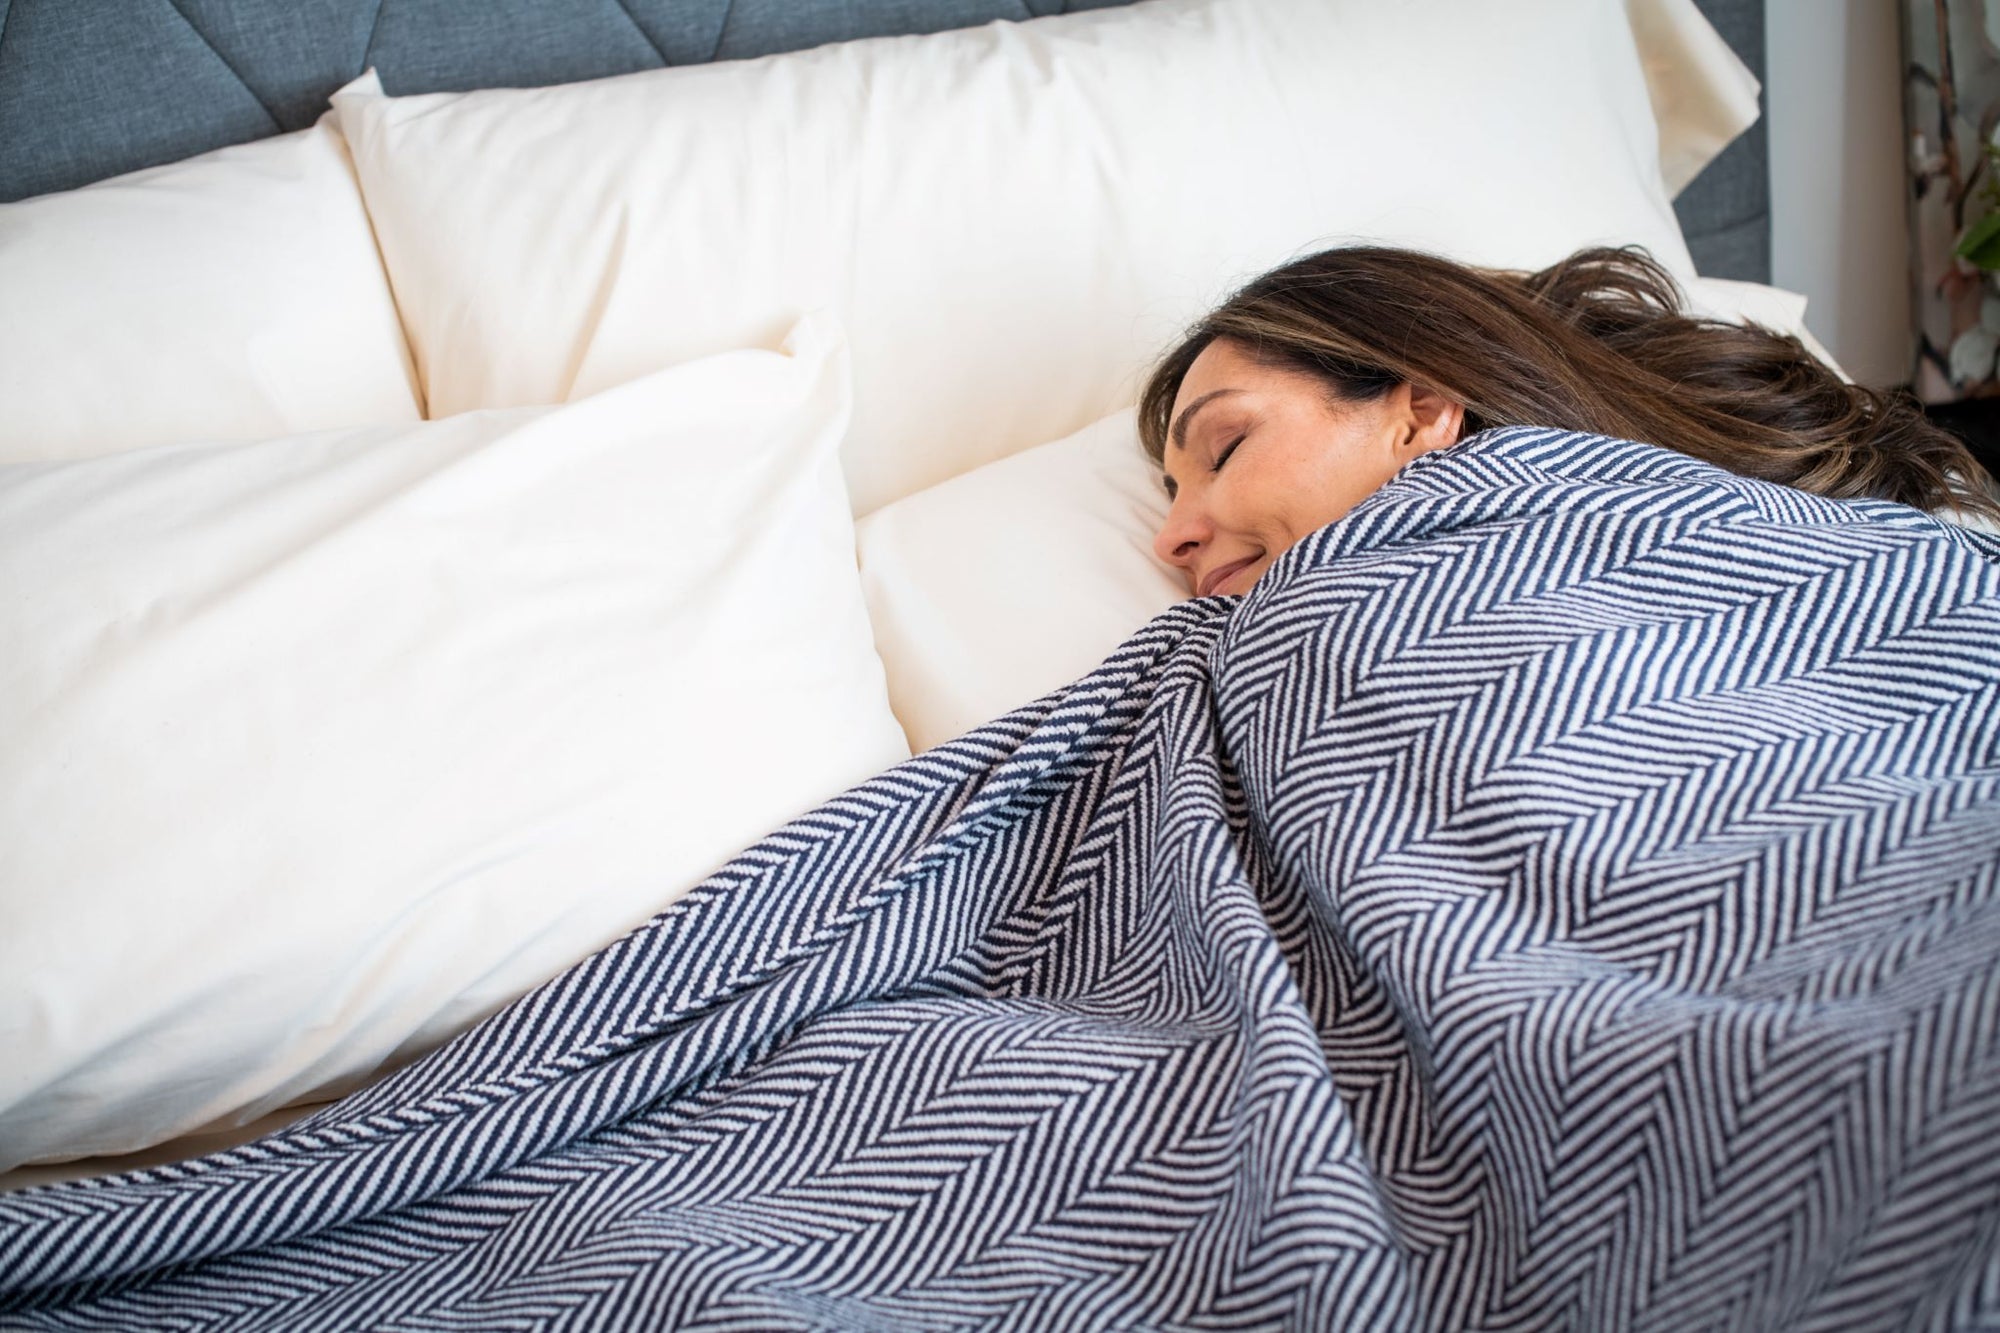 Blanket Your Bedroom in a Fresh Perspective